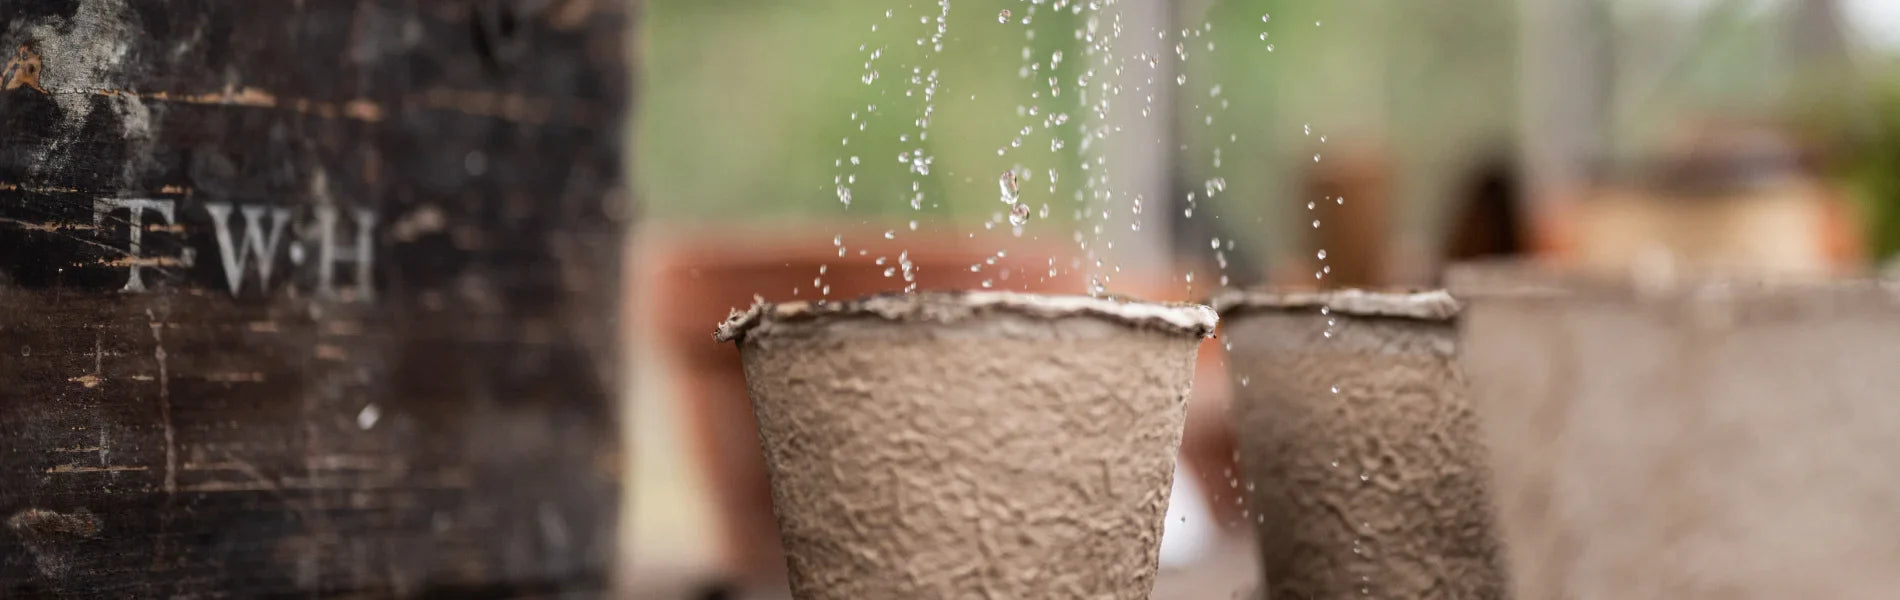 Watering seeds in recycled cardboard pots